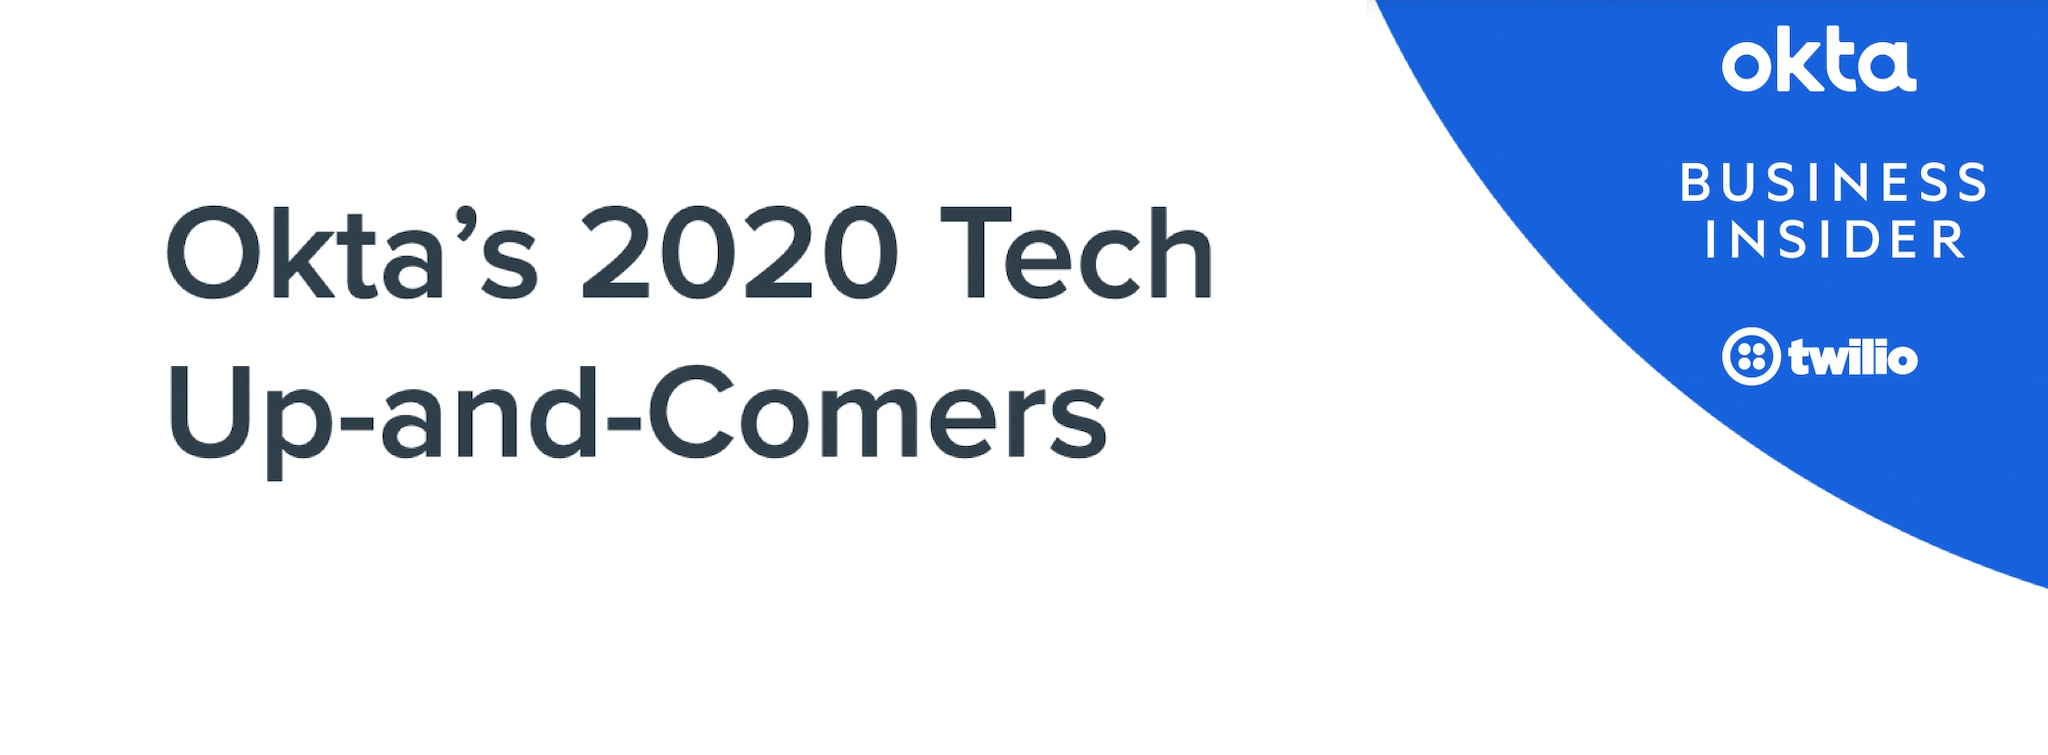 Okta: Tech Up-and-Comers 2020